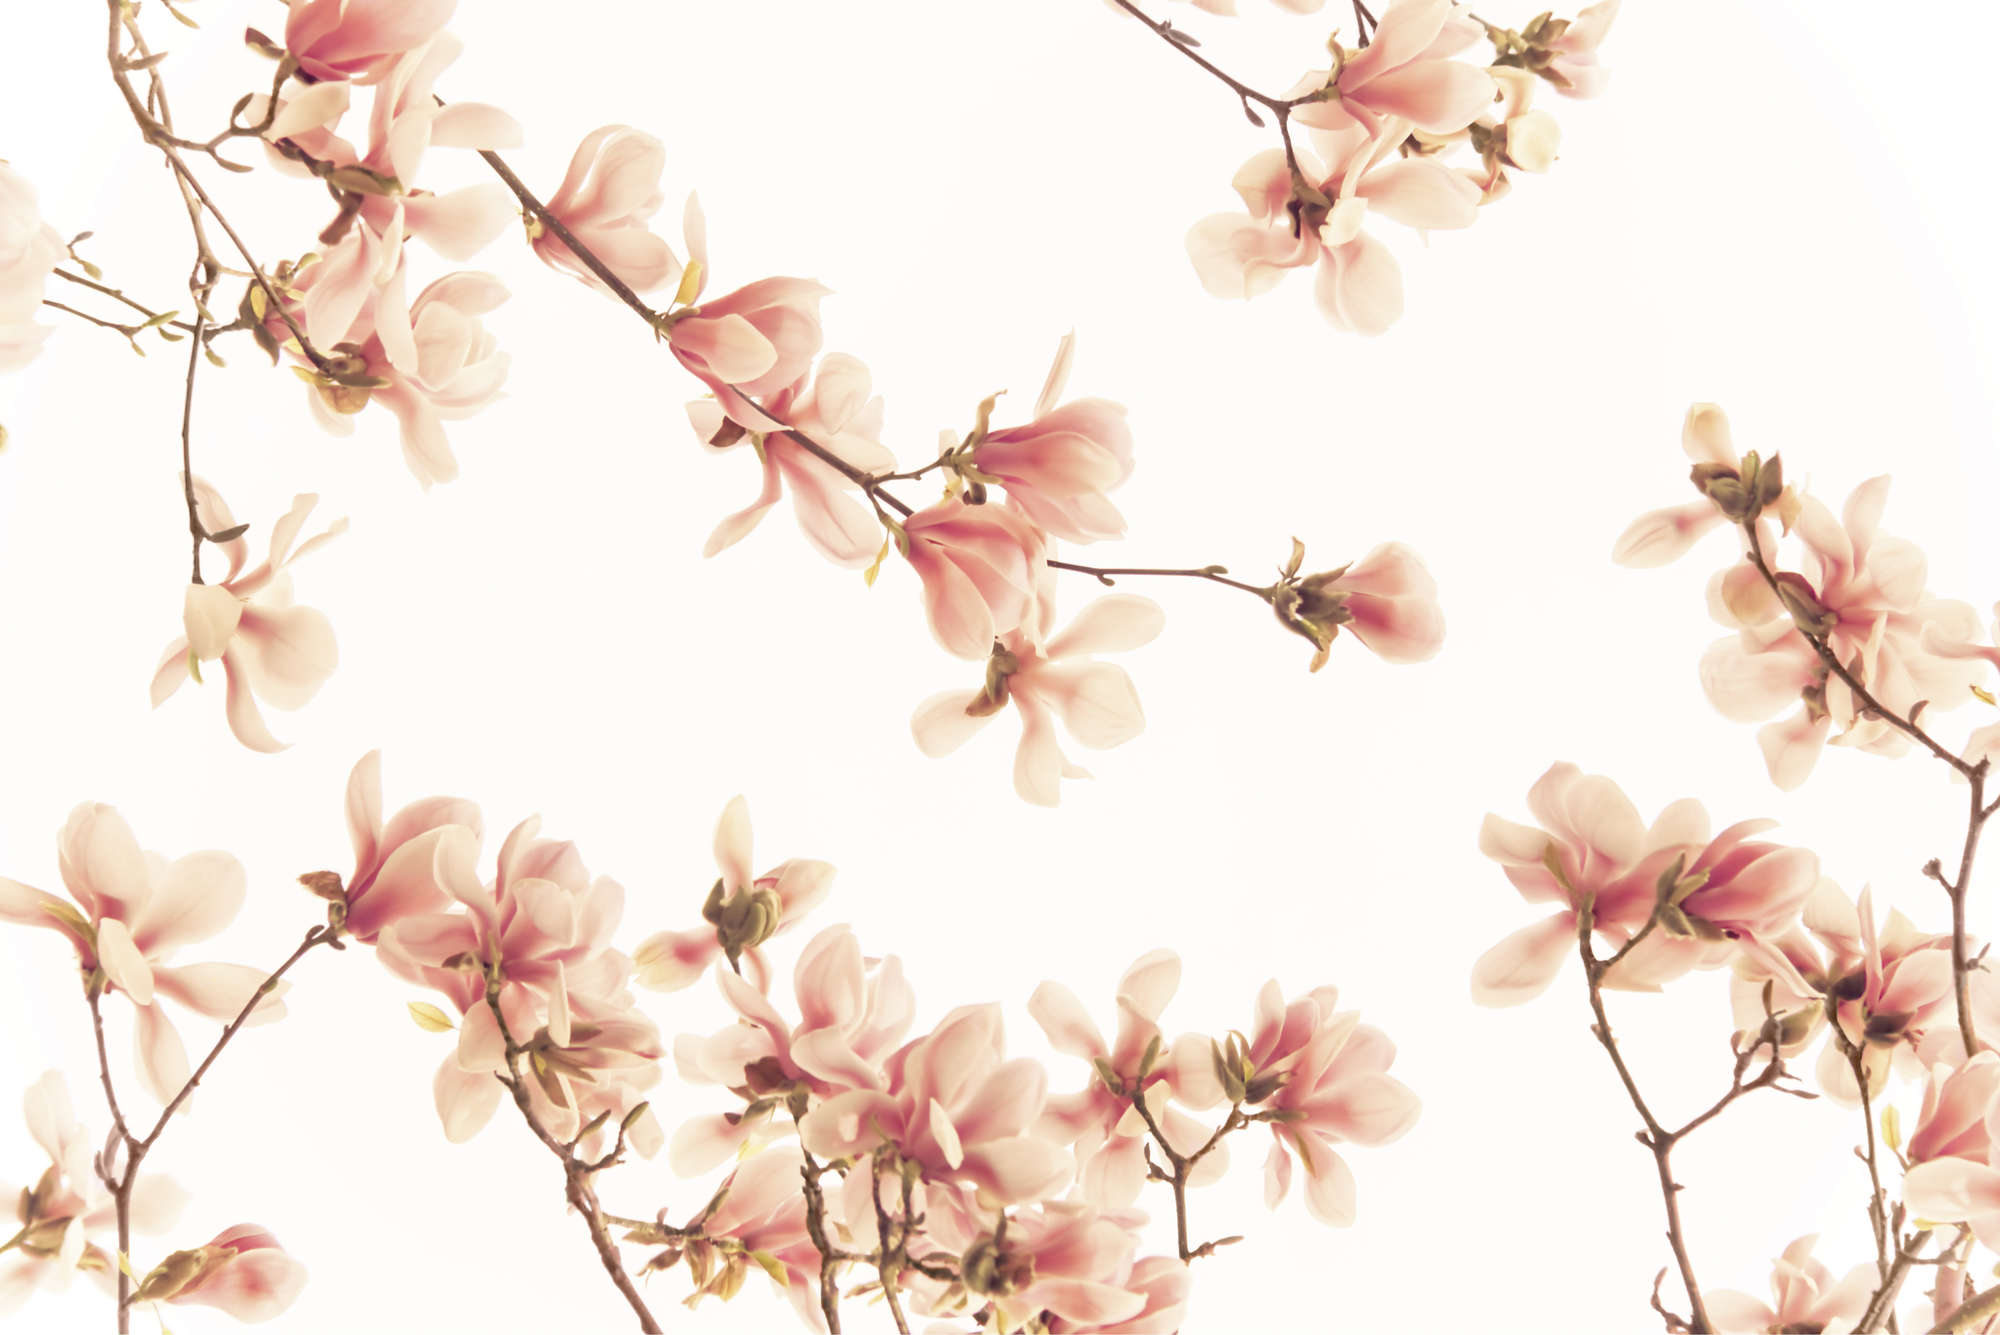             Fototapete Blüten in Rosa – Perlmutt Glattvlies
        